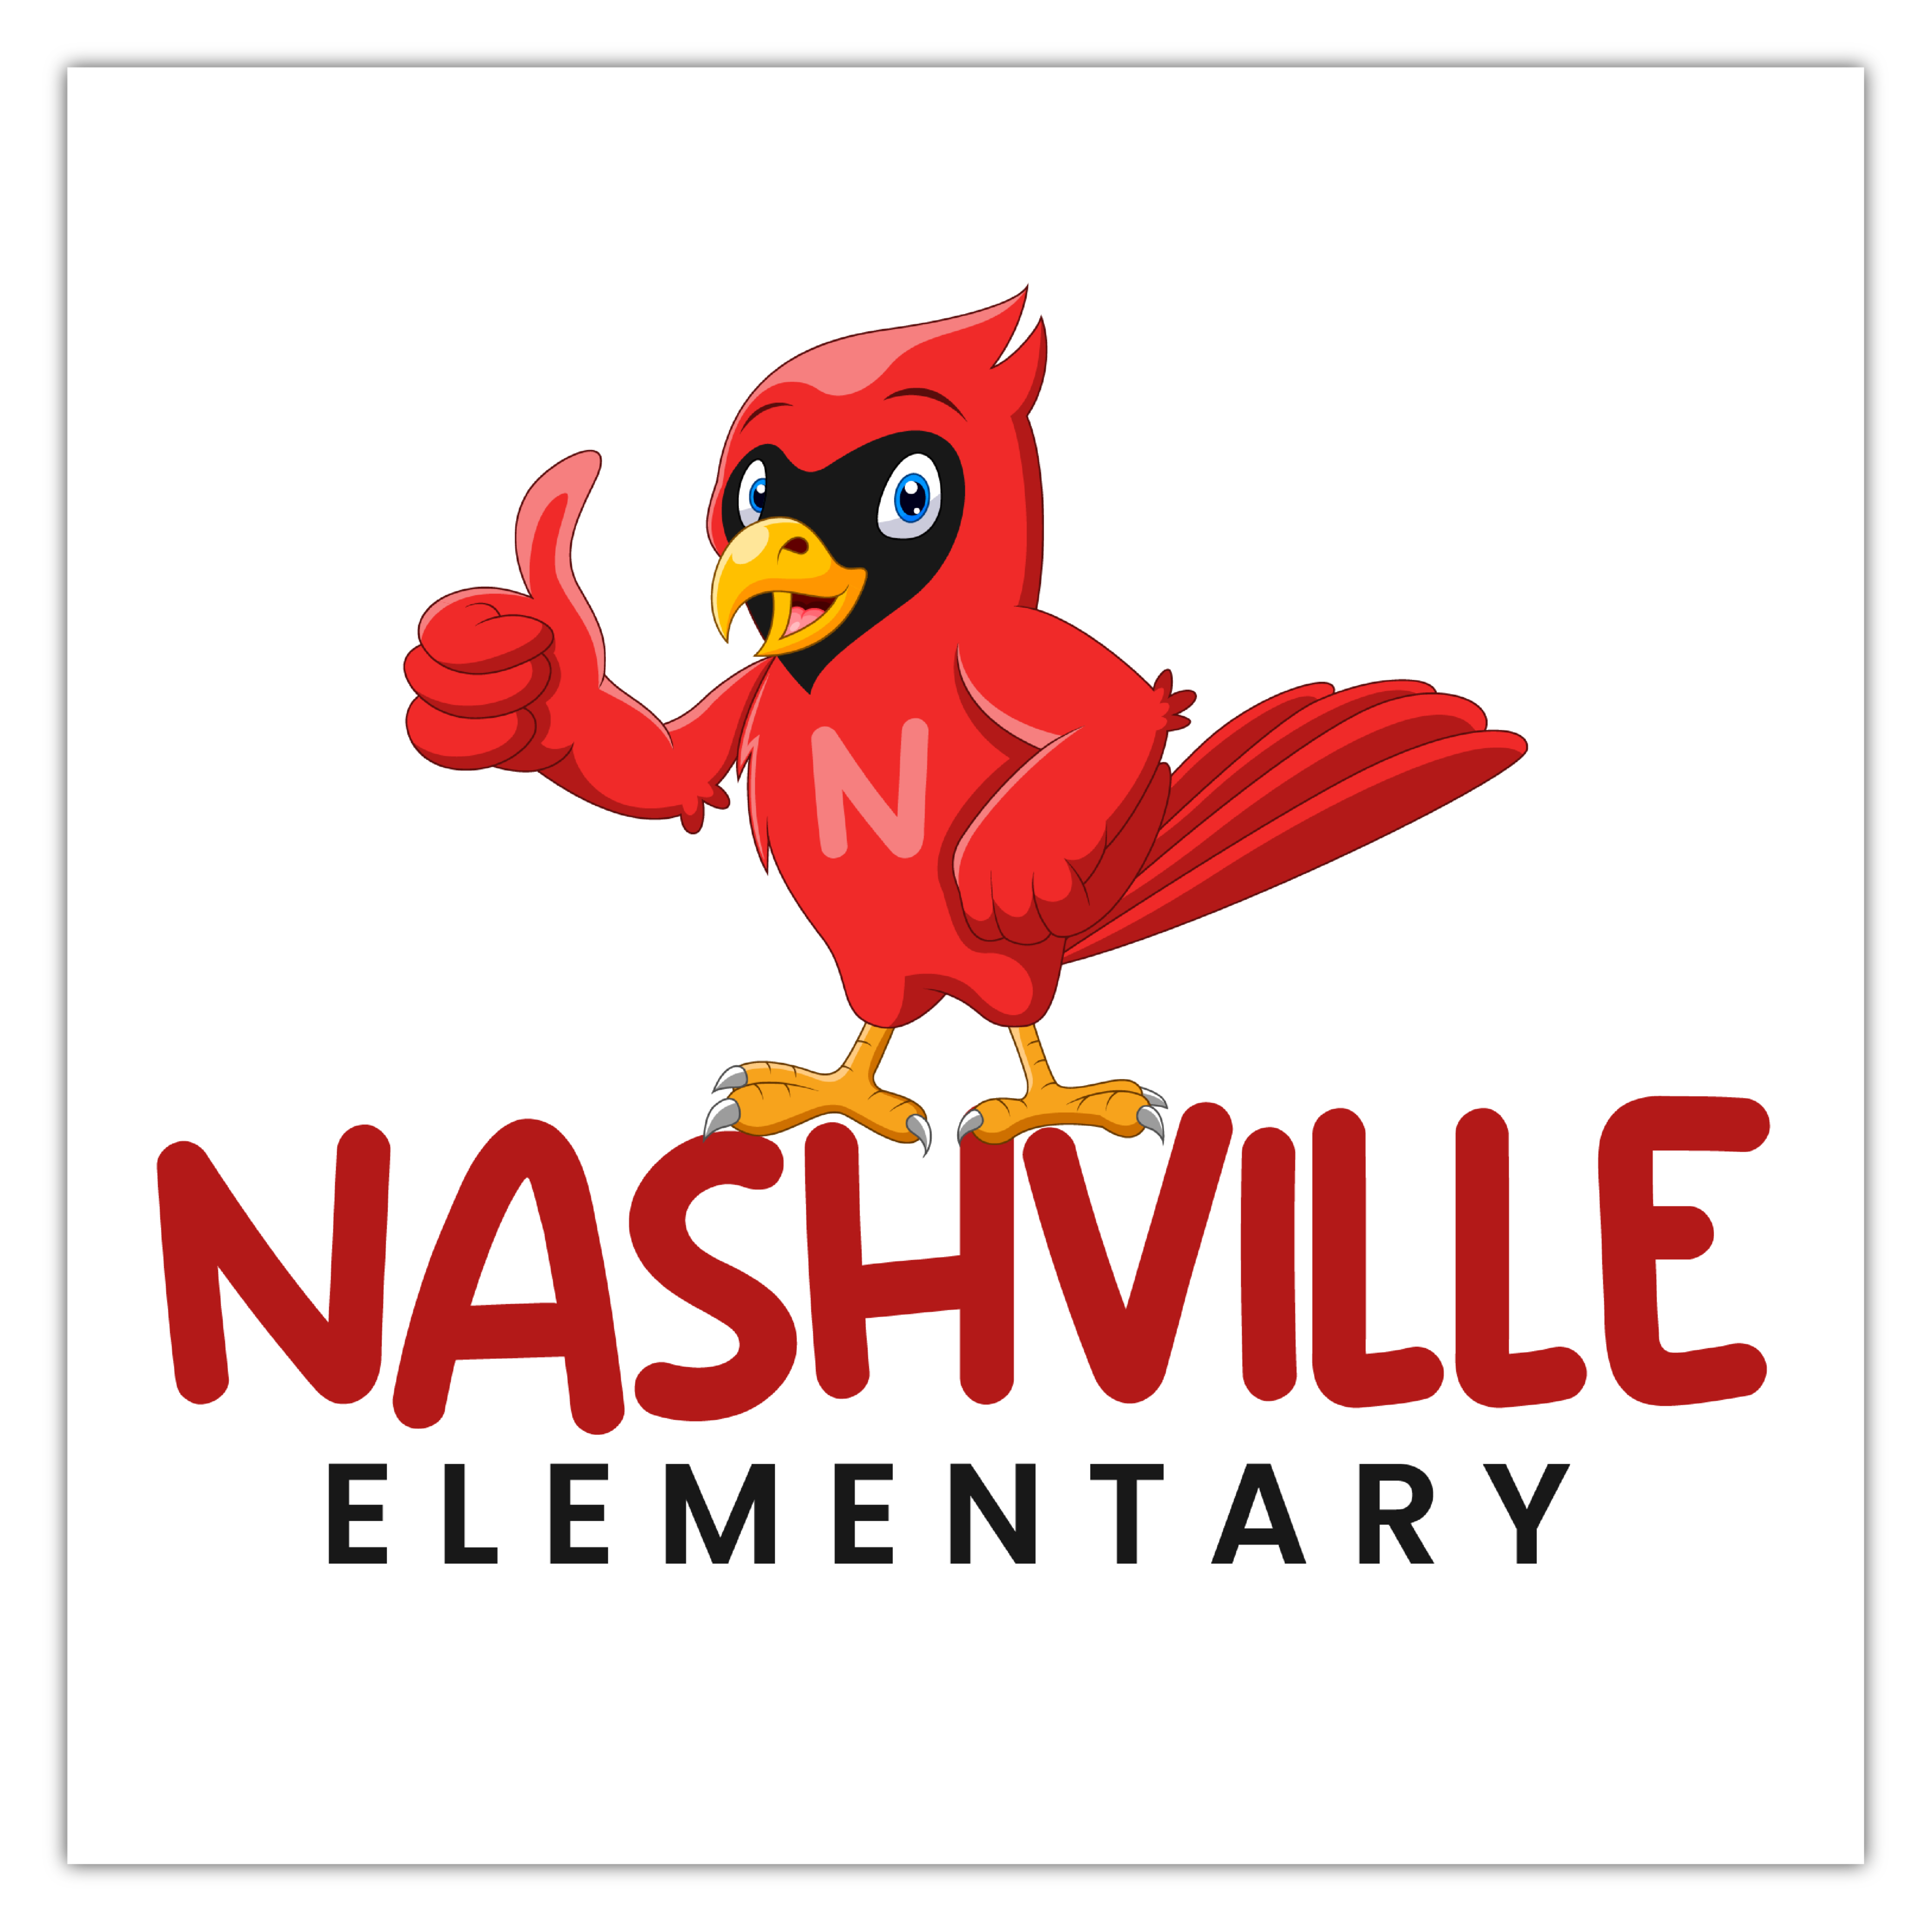 Nashville Elementary logo